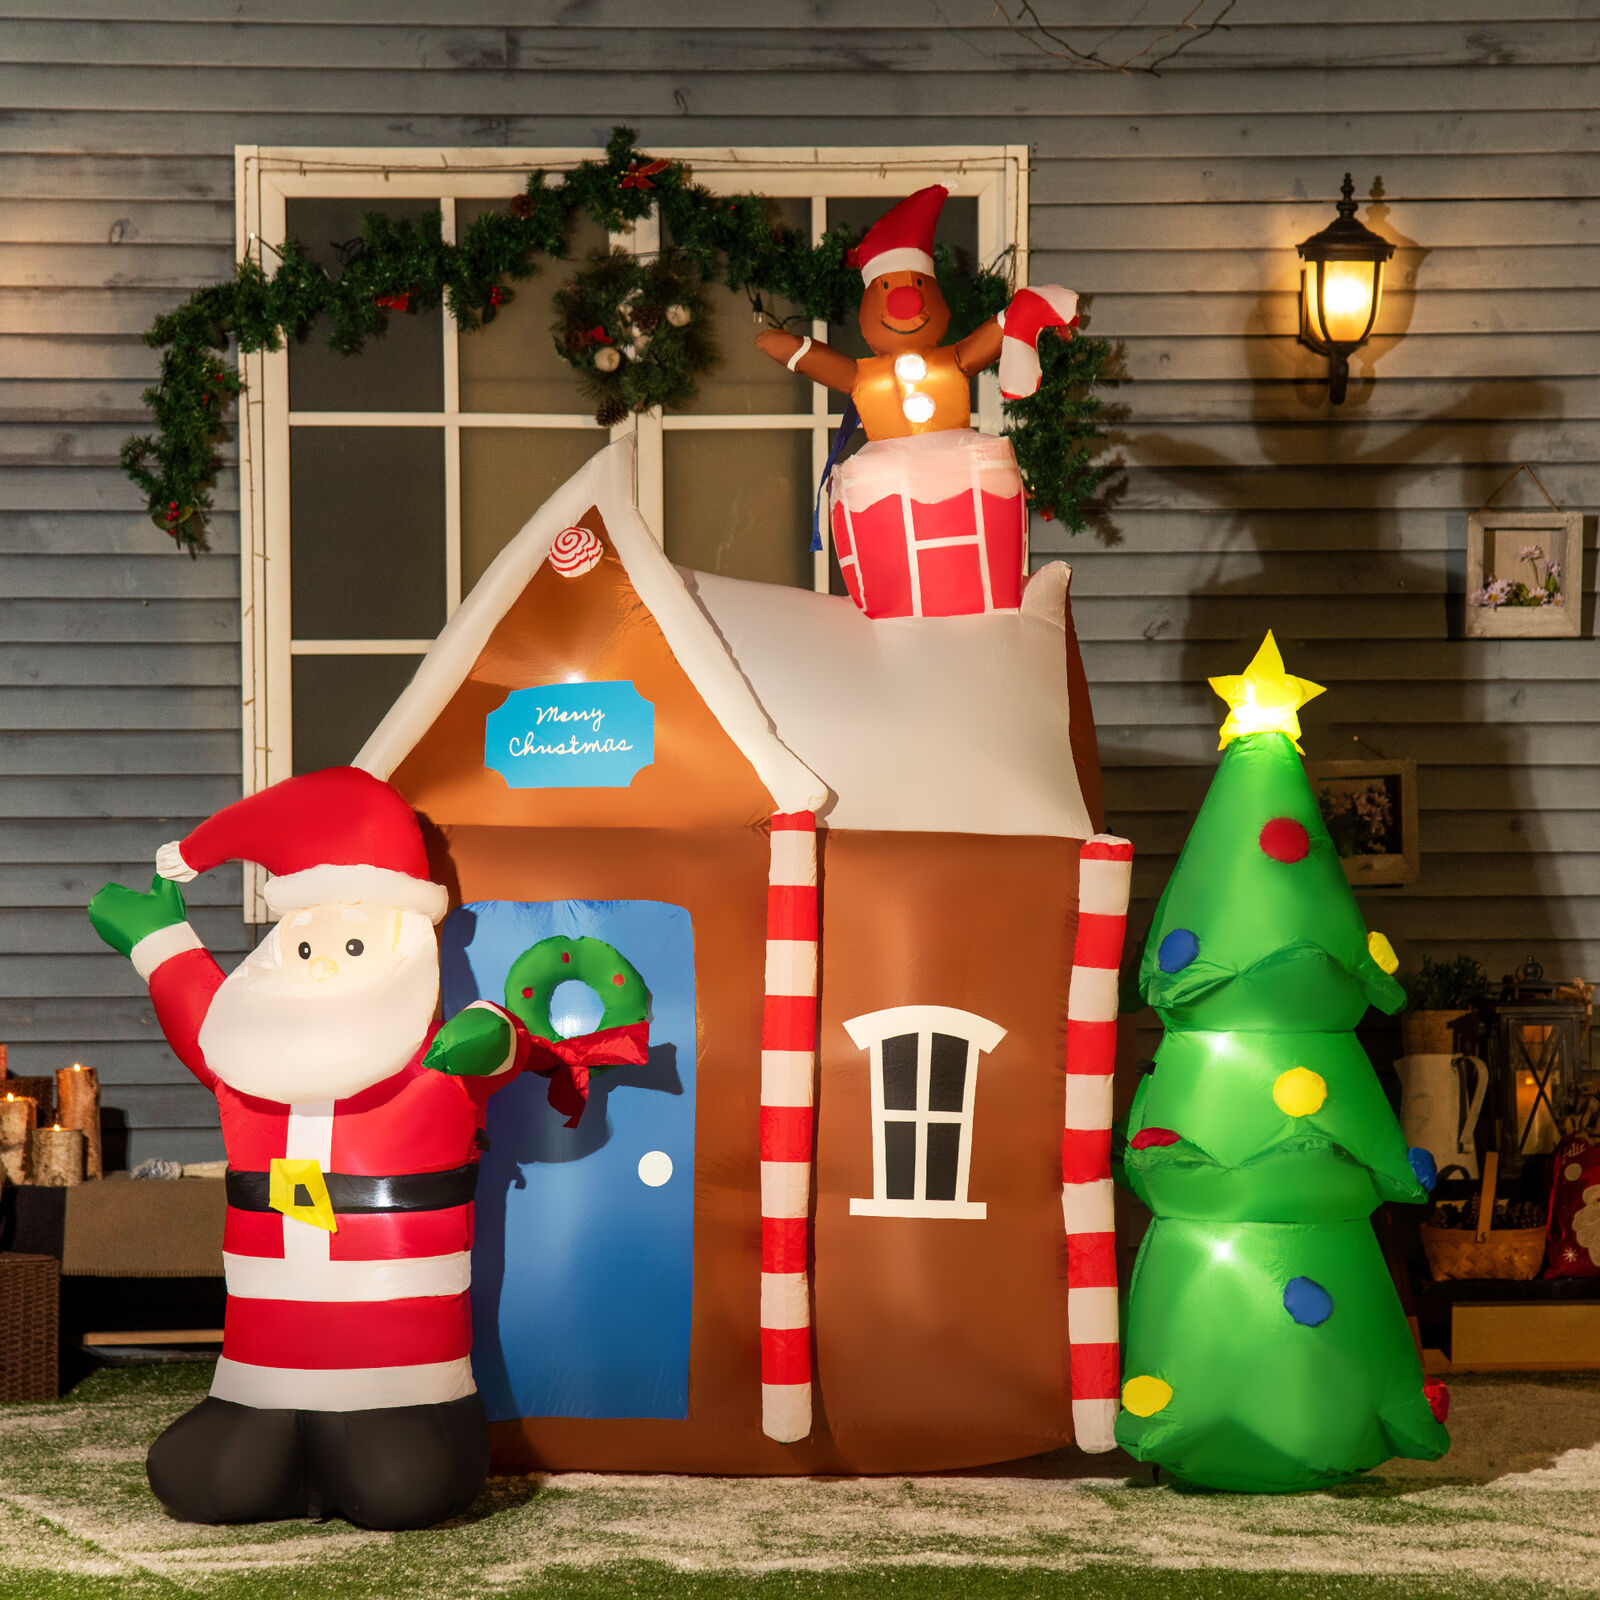 7.5' Inflatable Christmas Gingerbread House w/ Santa and Christmas Tree LED